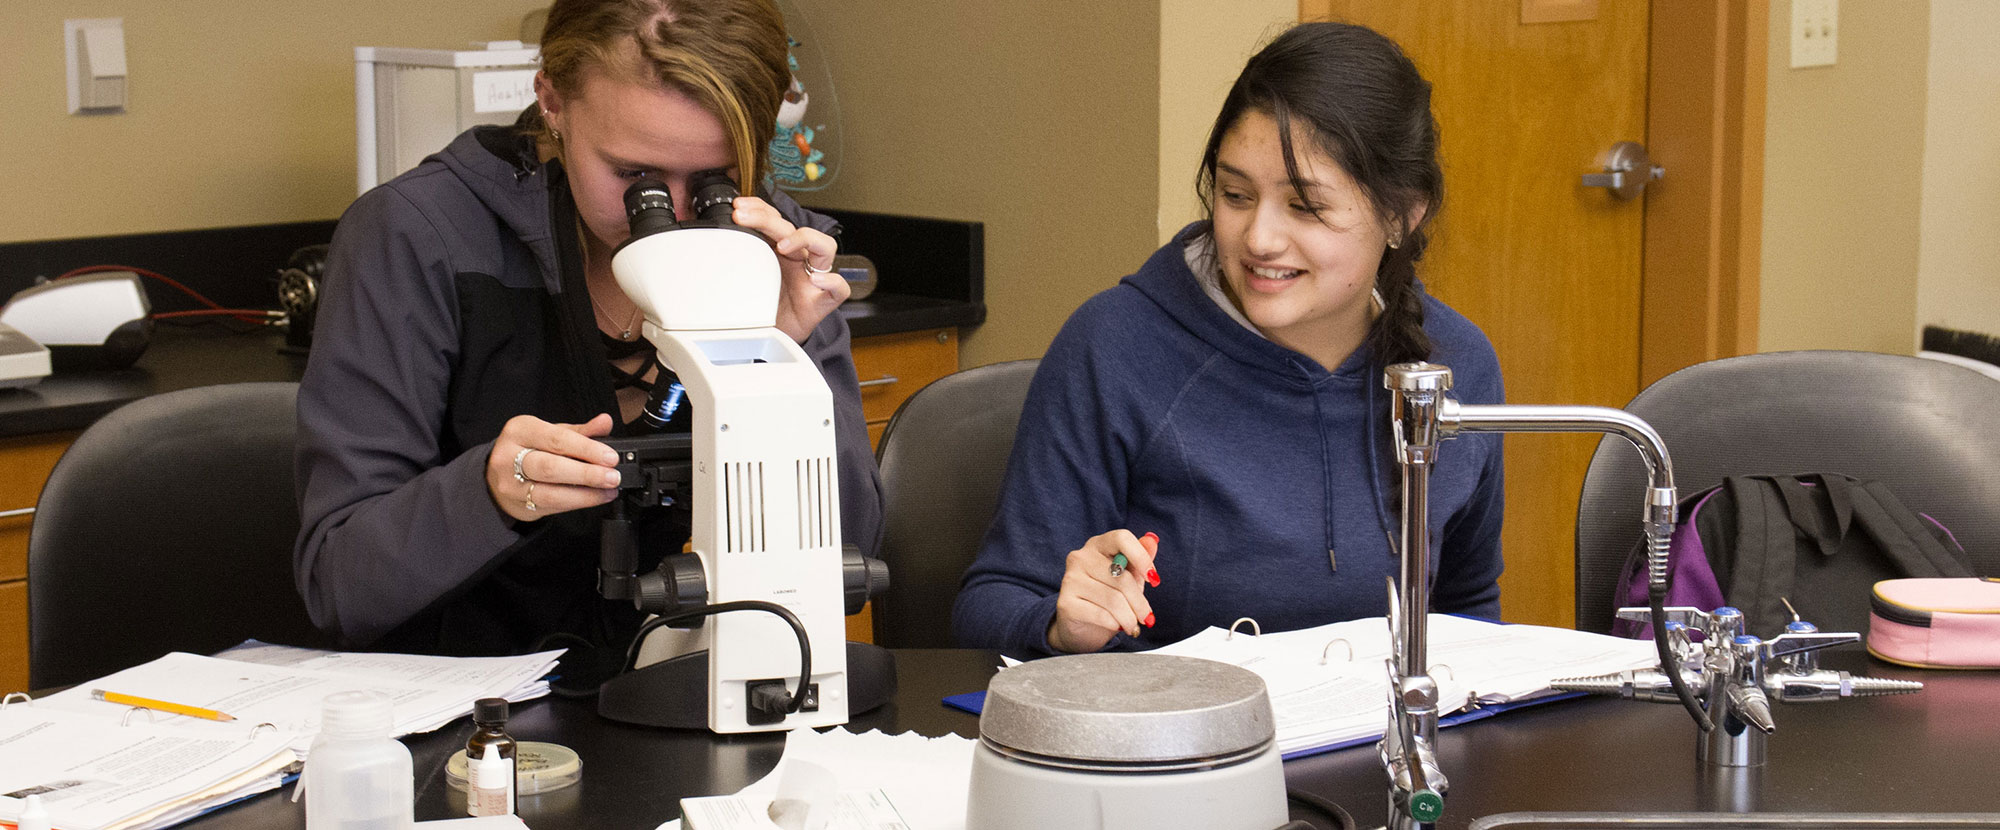 Female biology student uses microscope as her partner writes down data.